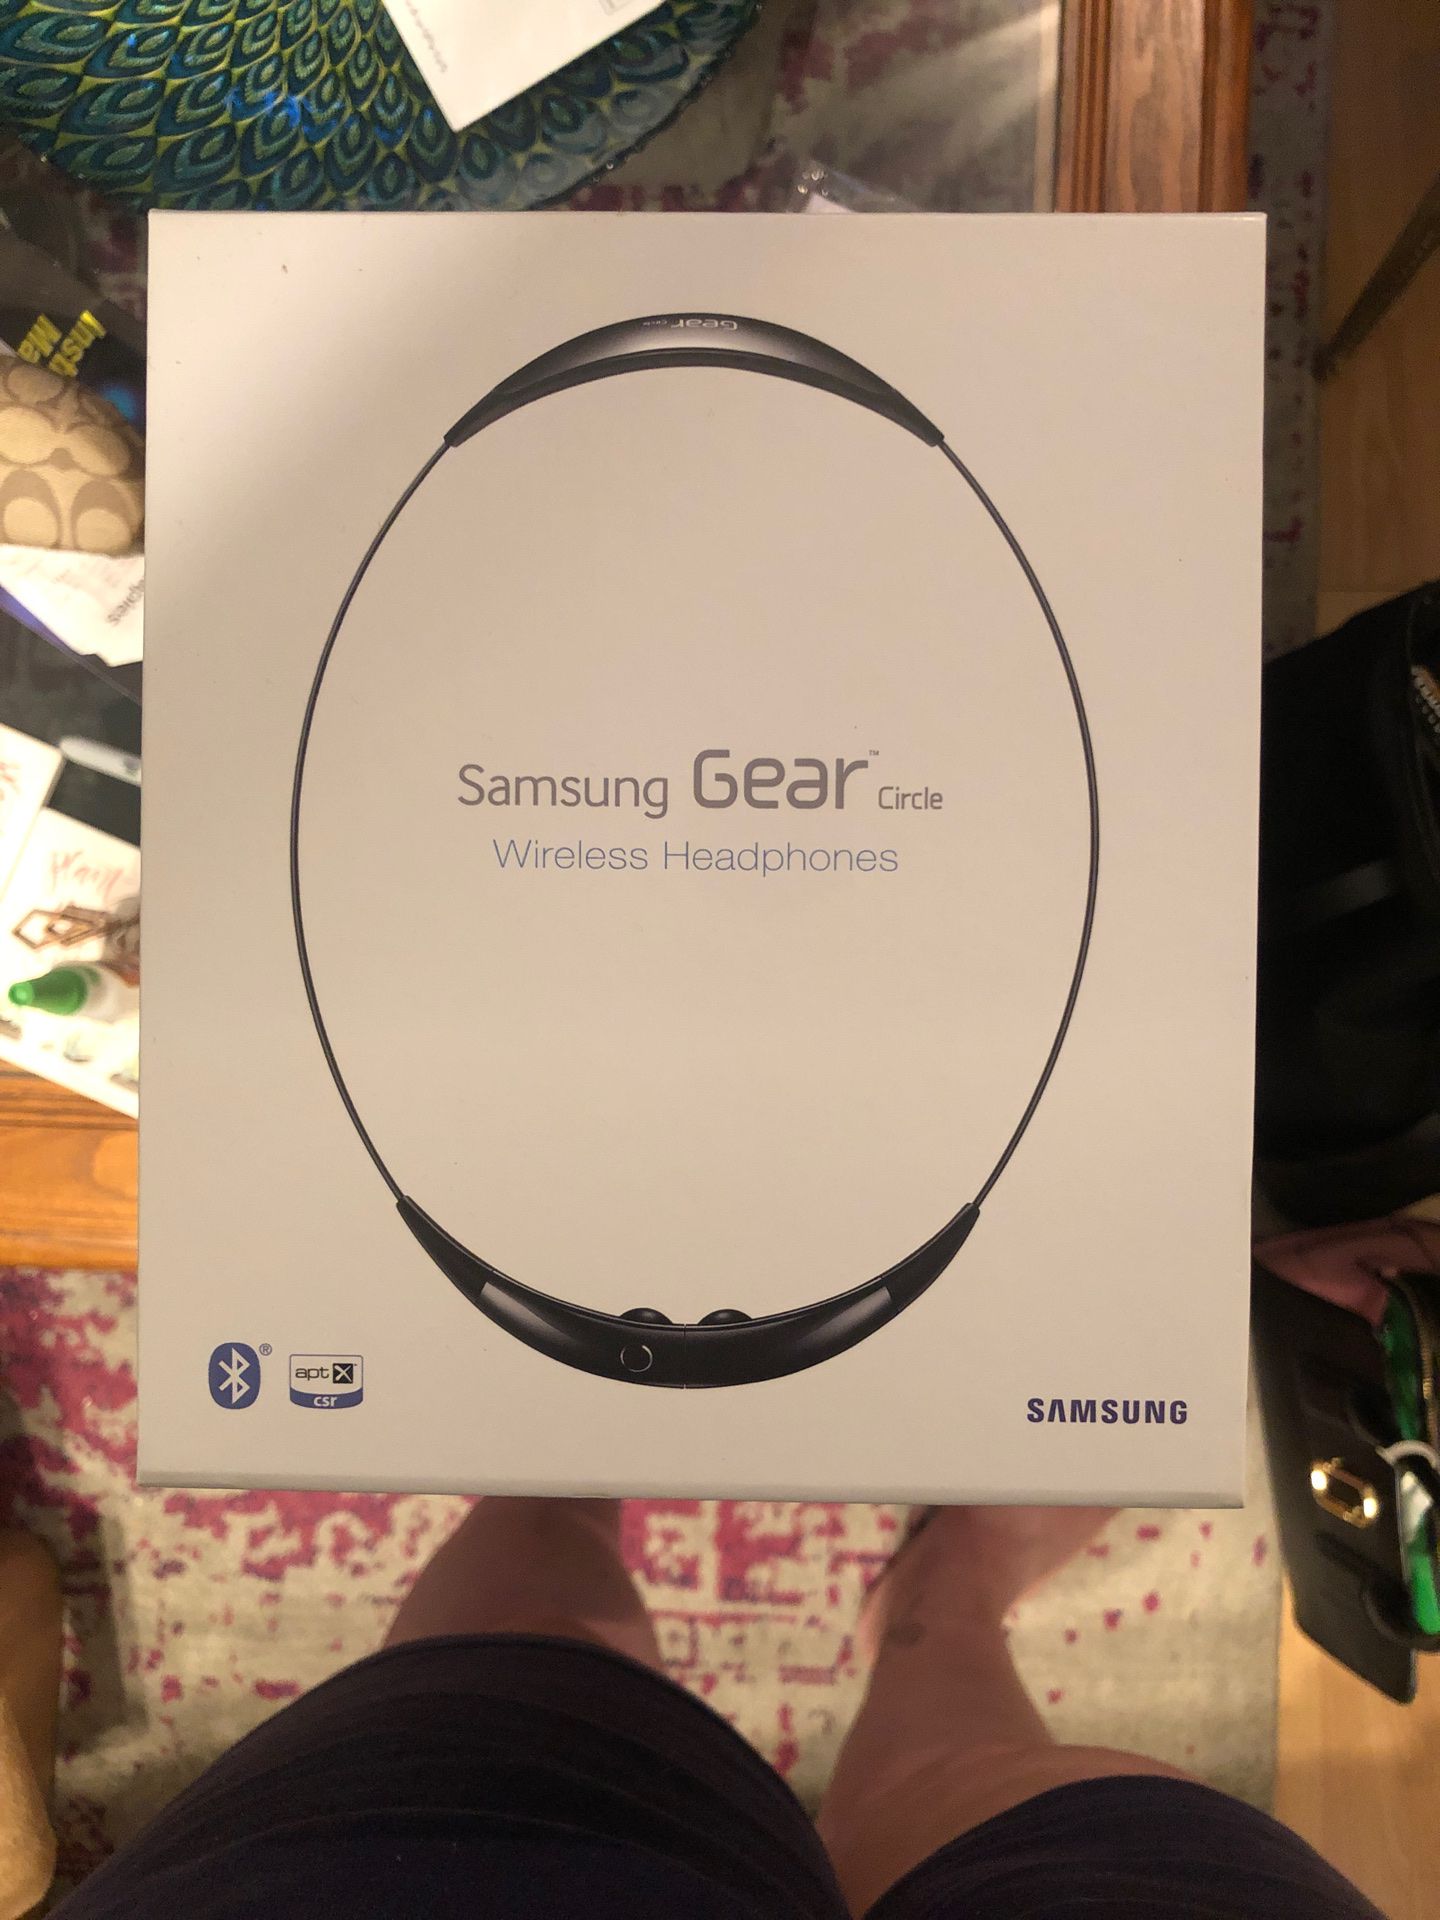 Samsung Gear wireless headphones